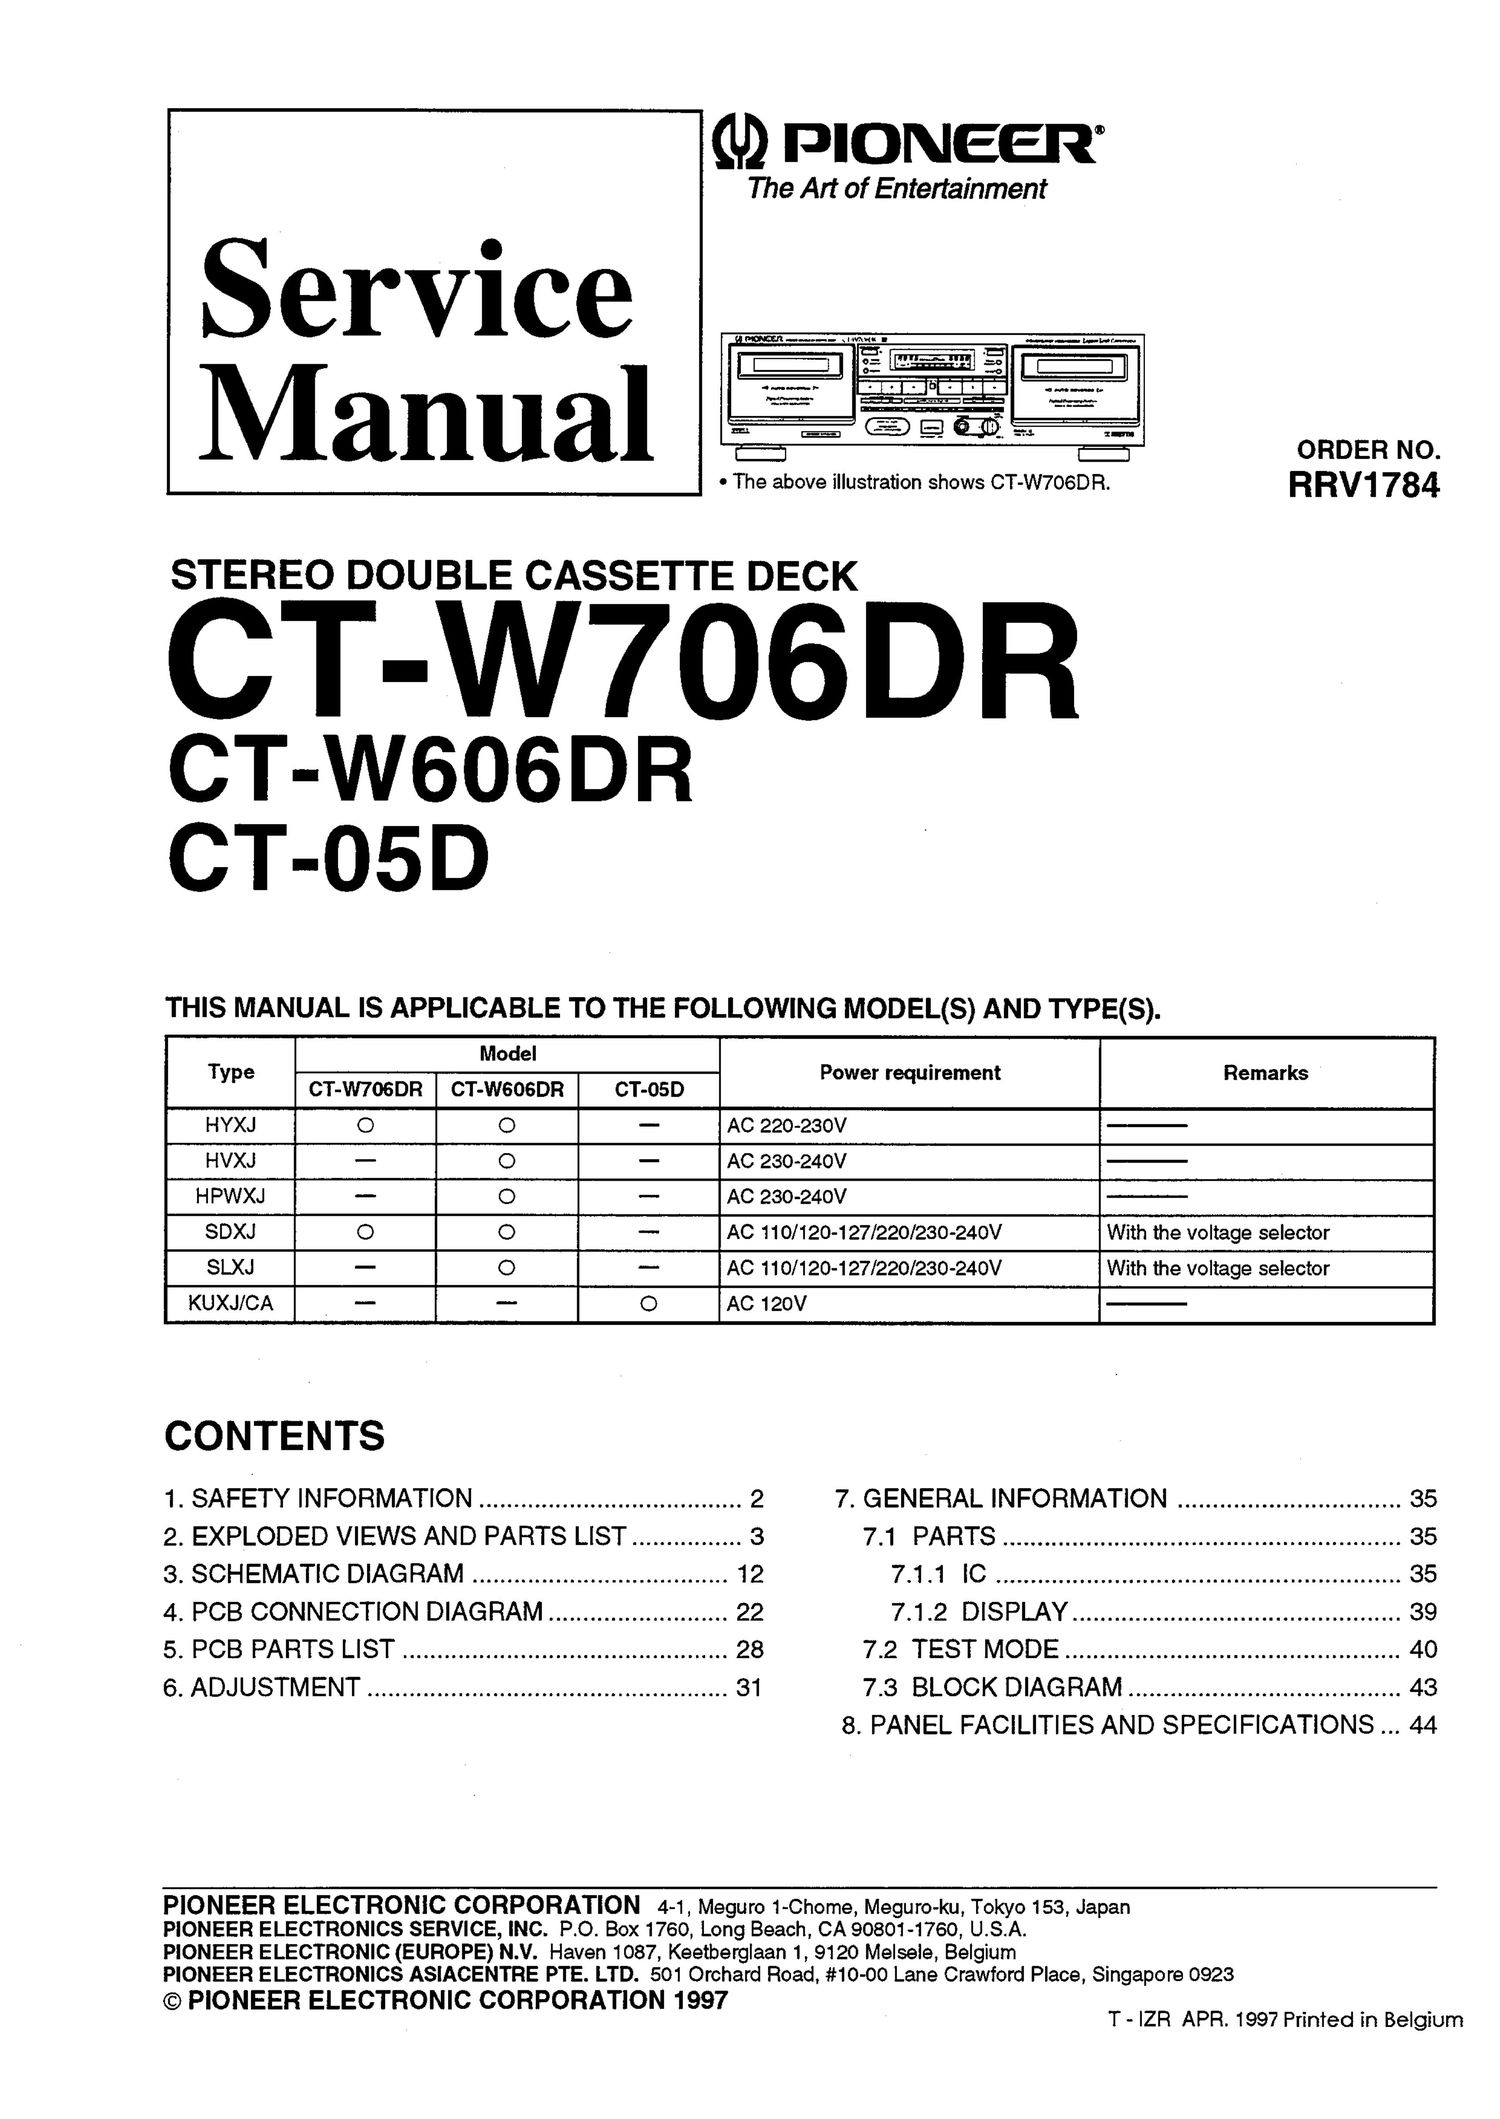 pioneer ctw 706 dr service manual